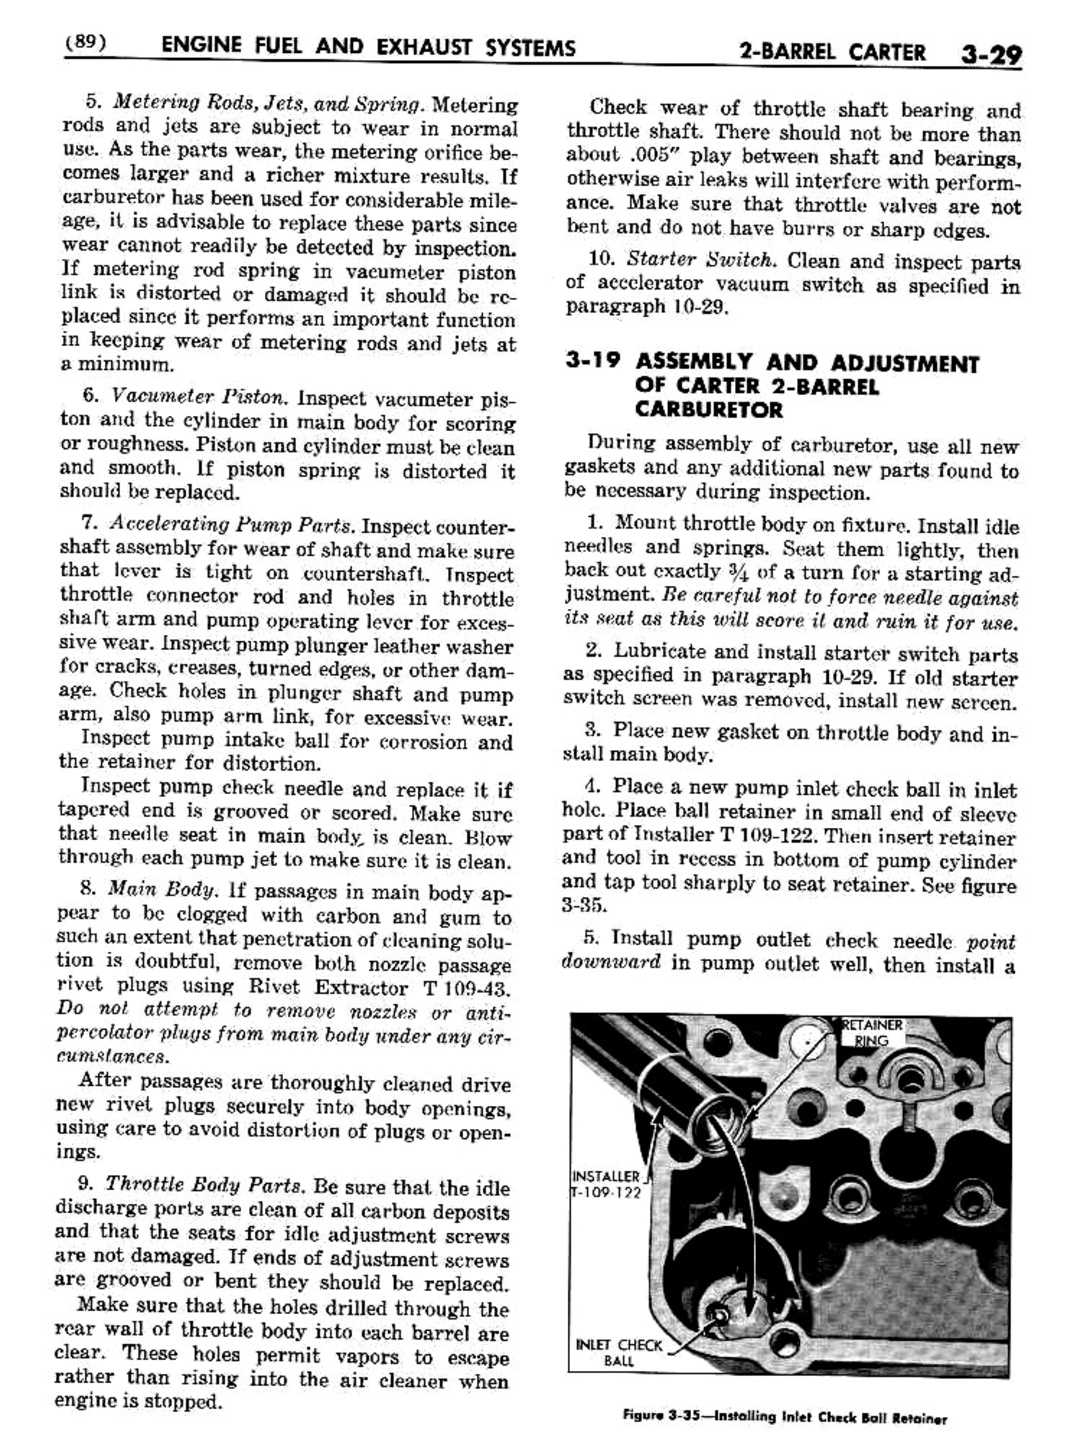 n_04 1956 Buick Shop Manual - Engine Fuel & Exhaust-029-029.jpg